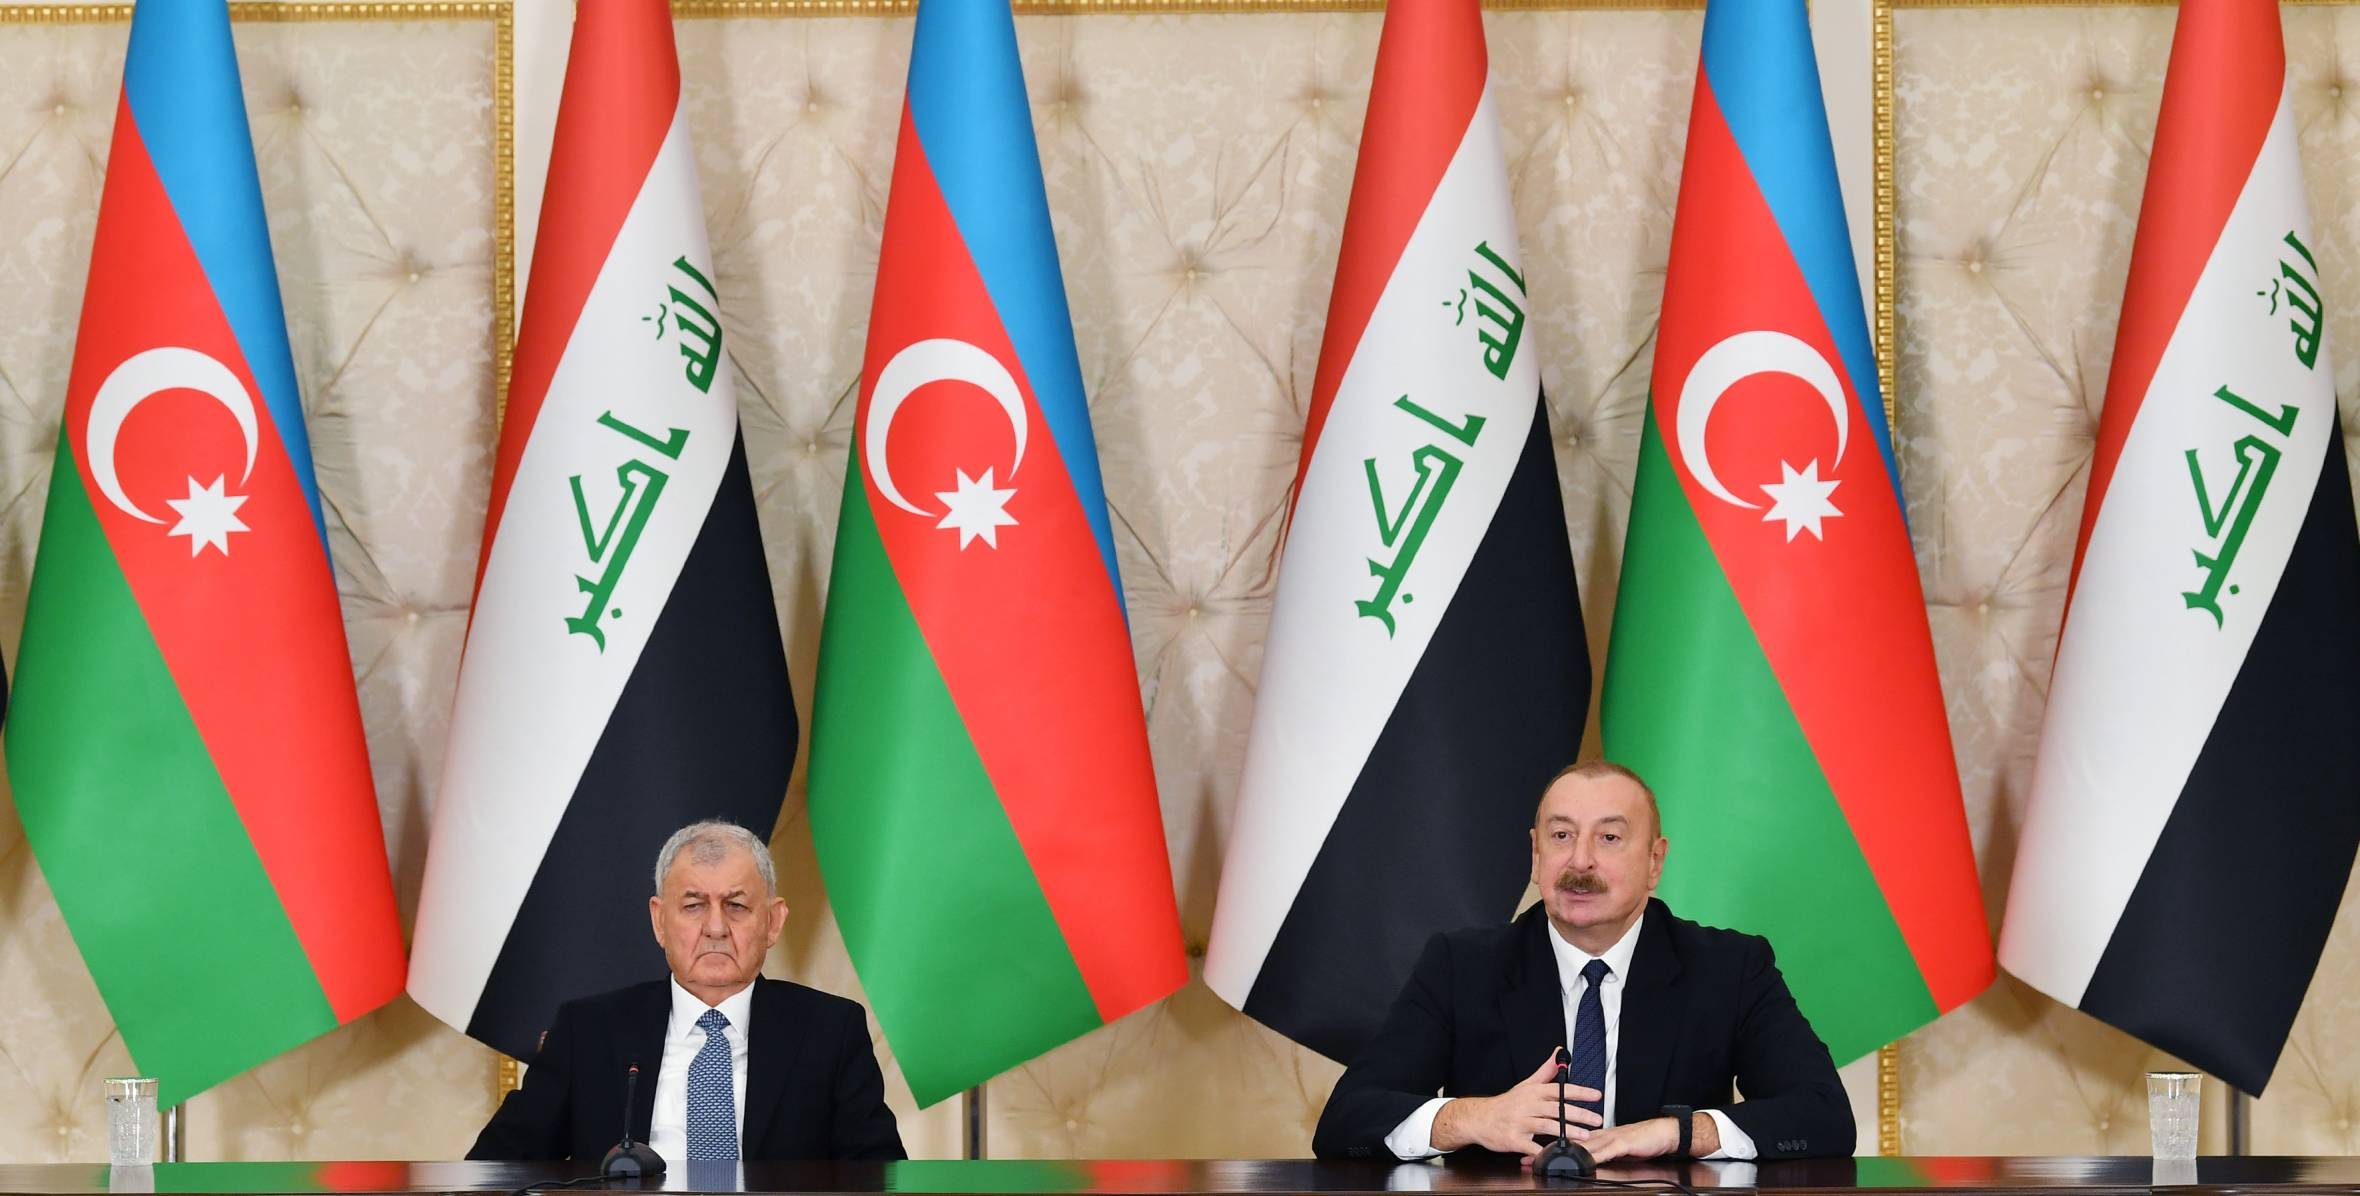 Presidents of Azerbaijan and Iraq made press statements